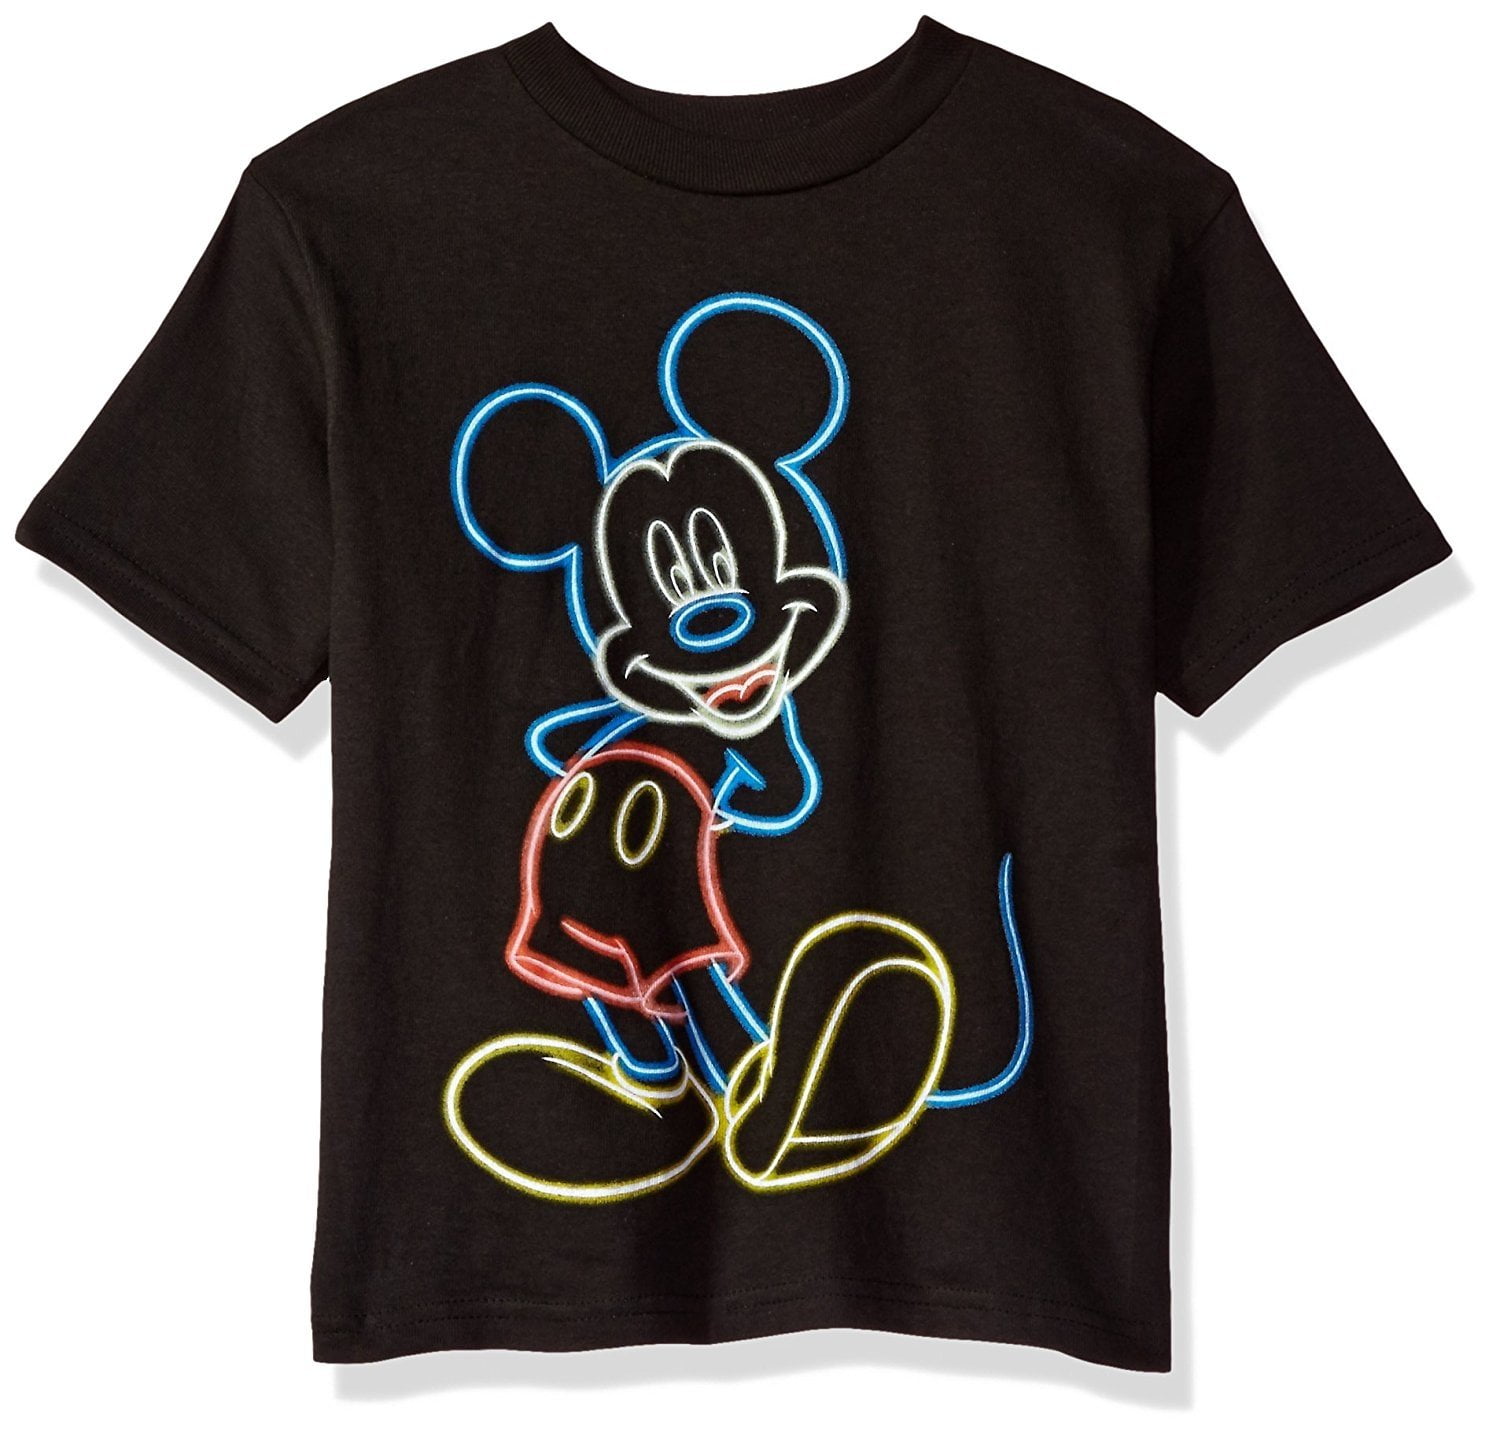 NWT Disney Store Mickey Mouse Boys Long Sleeve Shirt Top 5/6,7/8,10/12,14